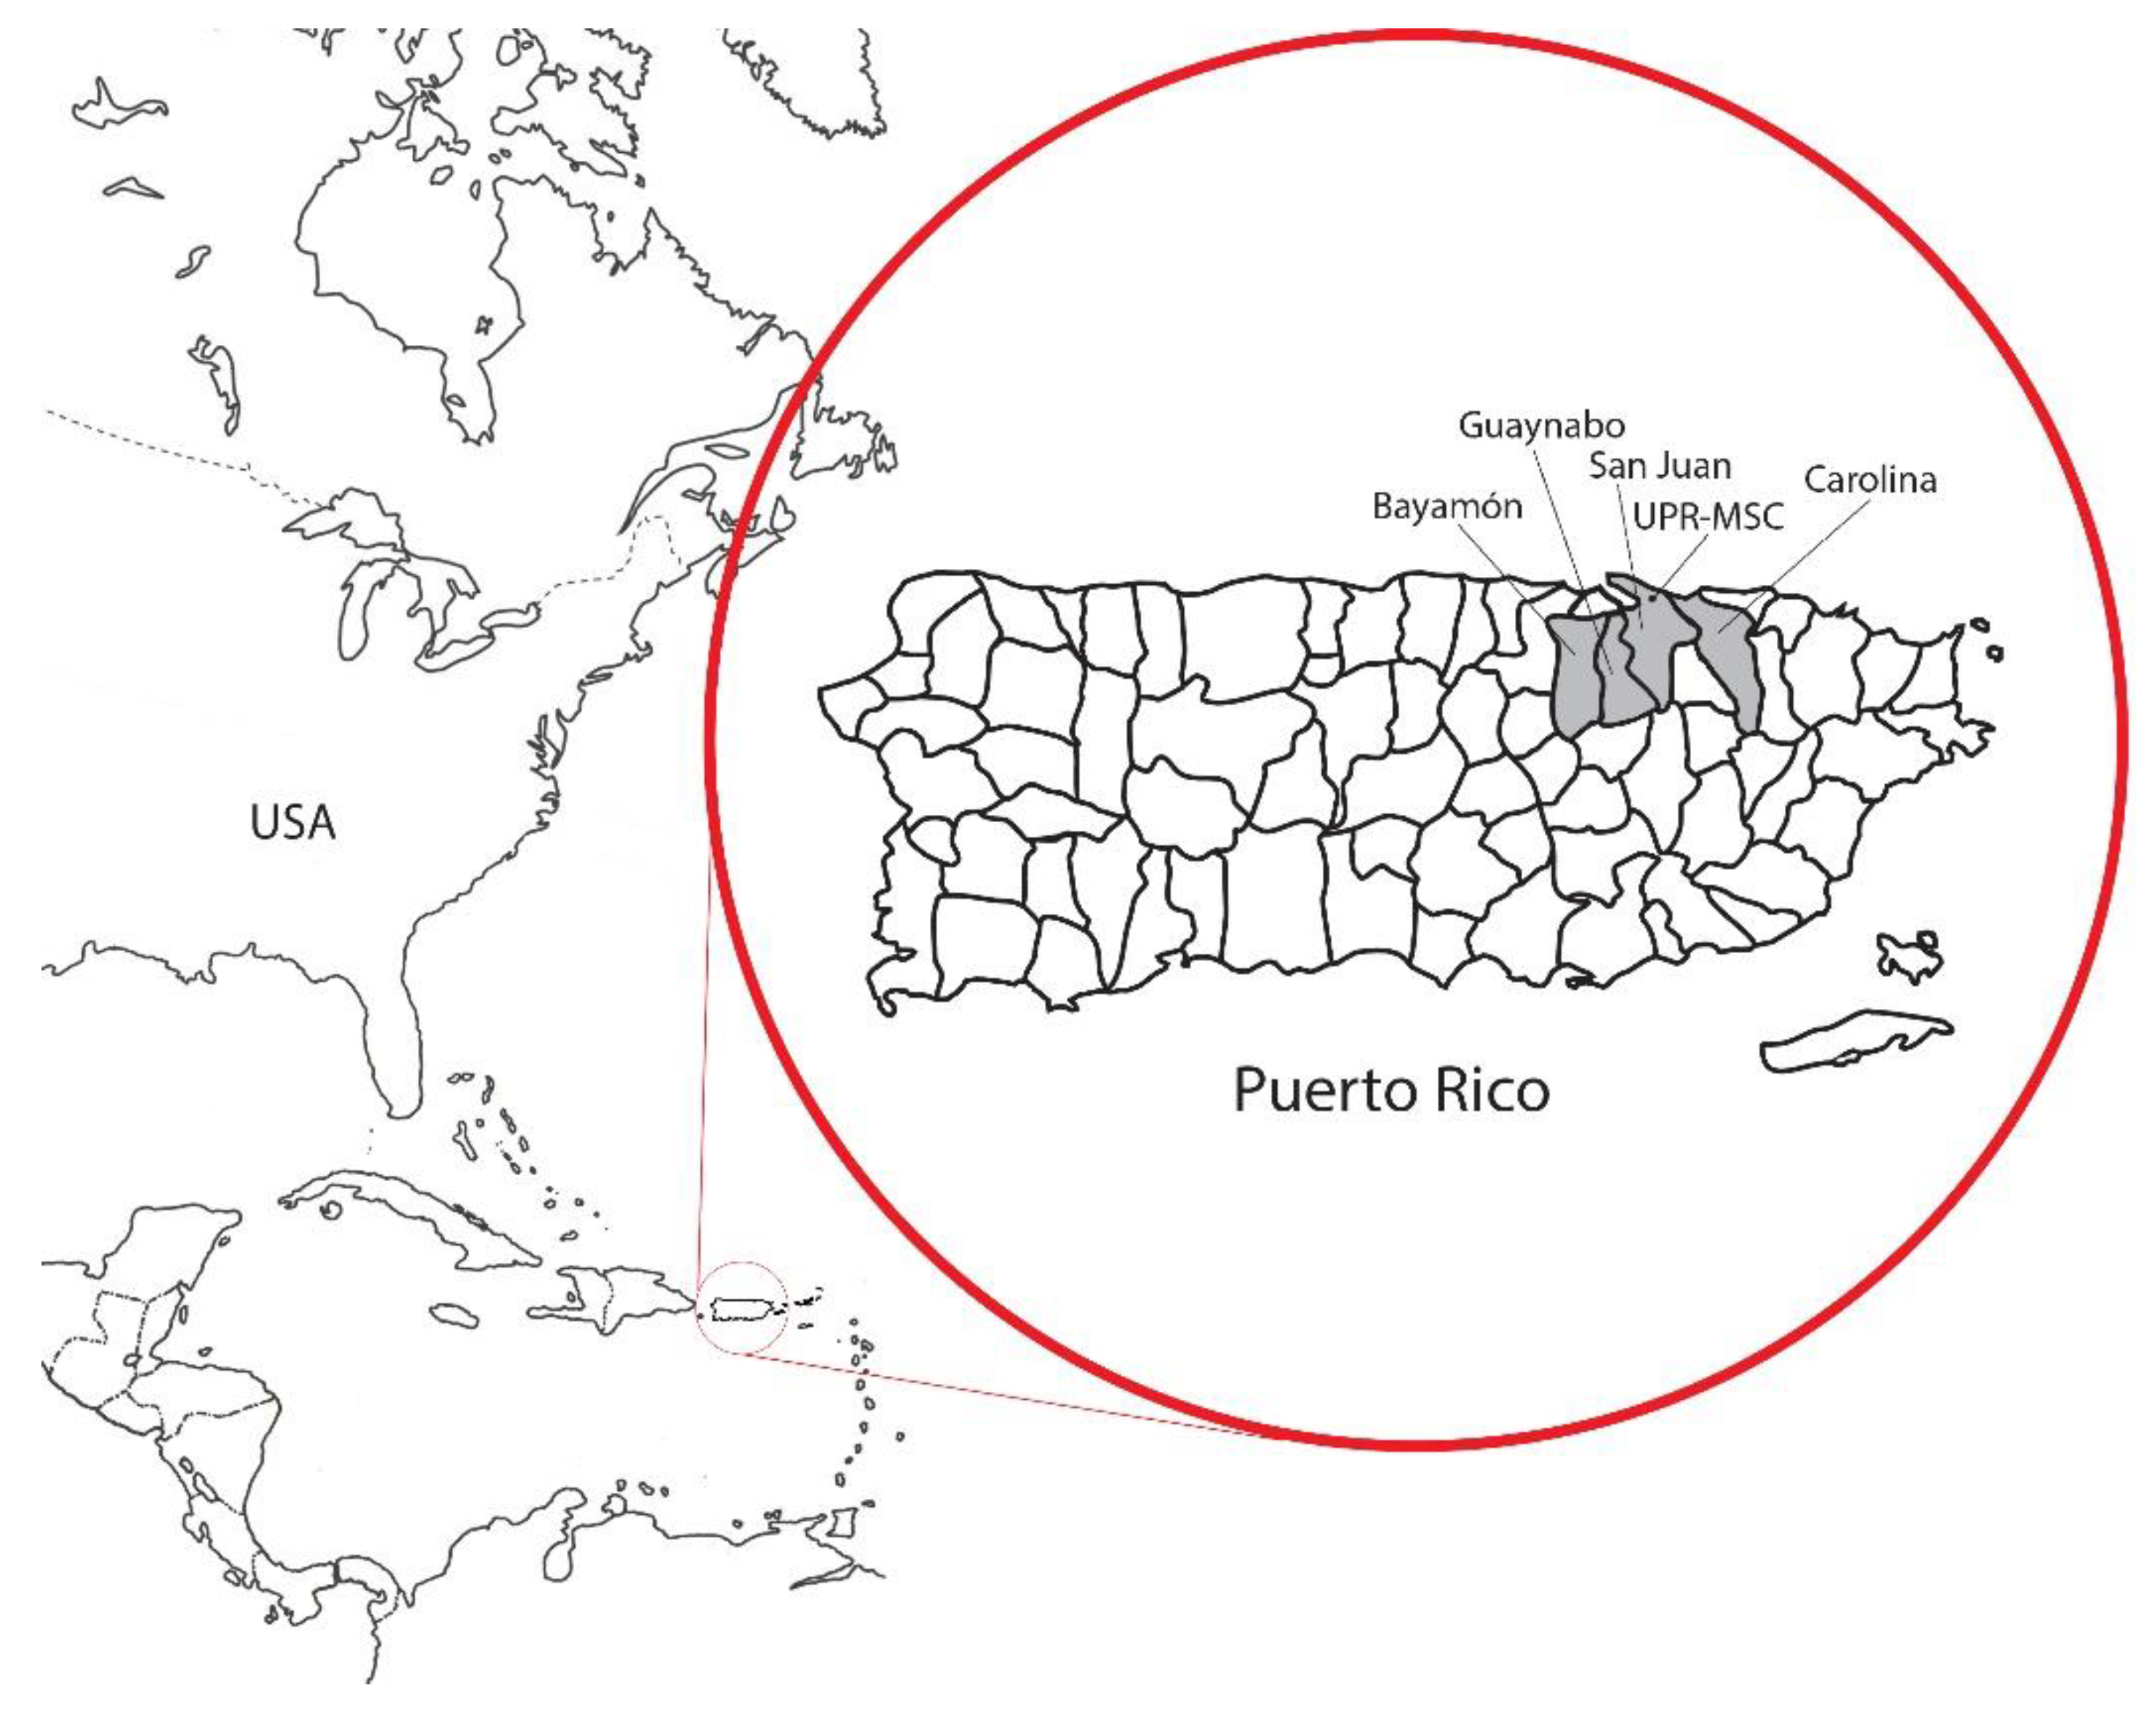 puerto rico a case study of population control